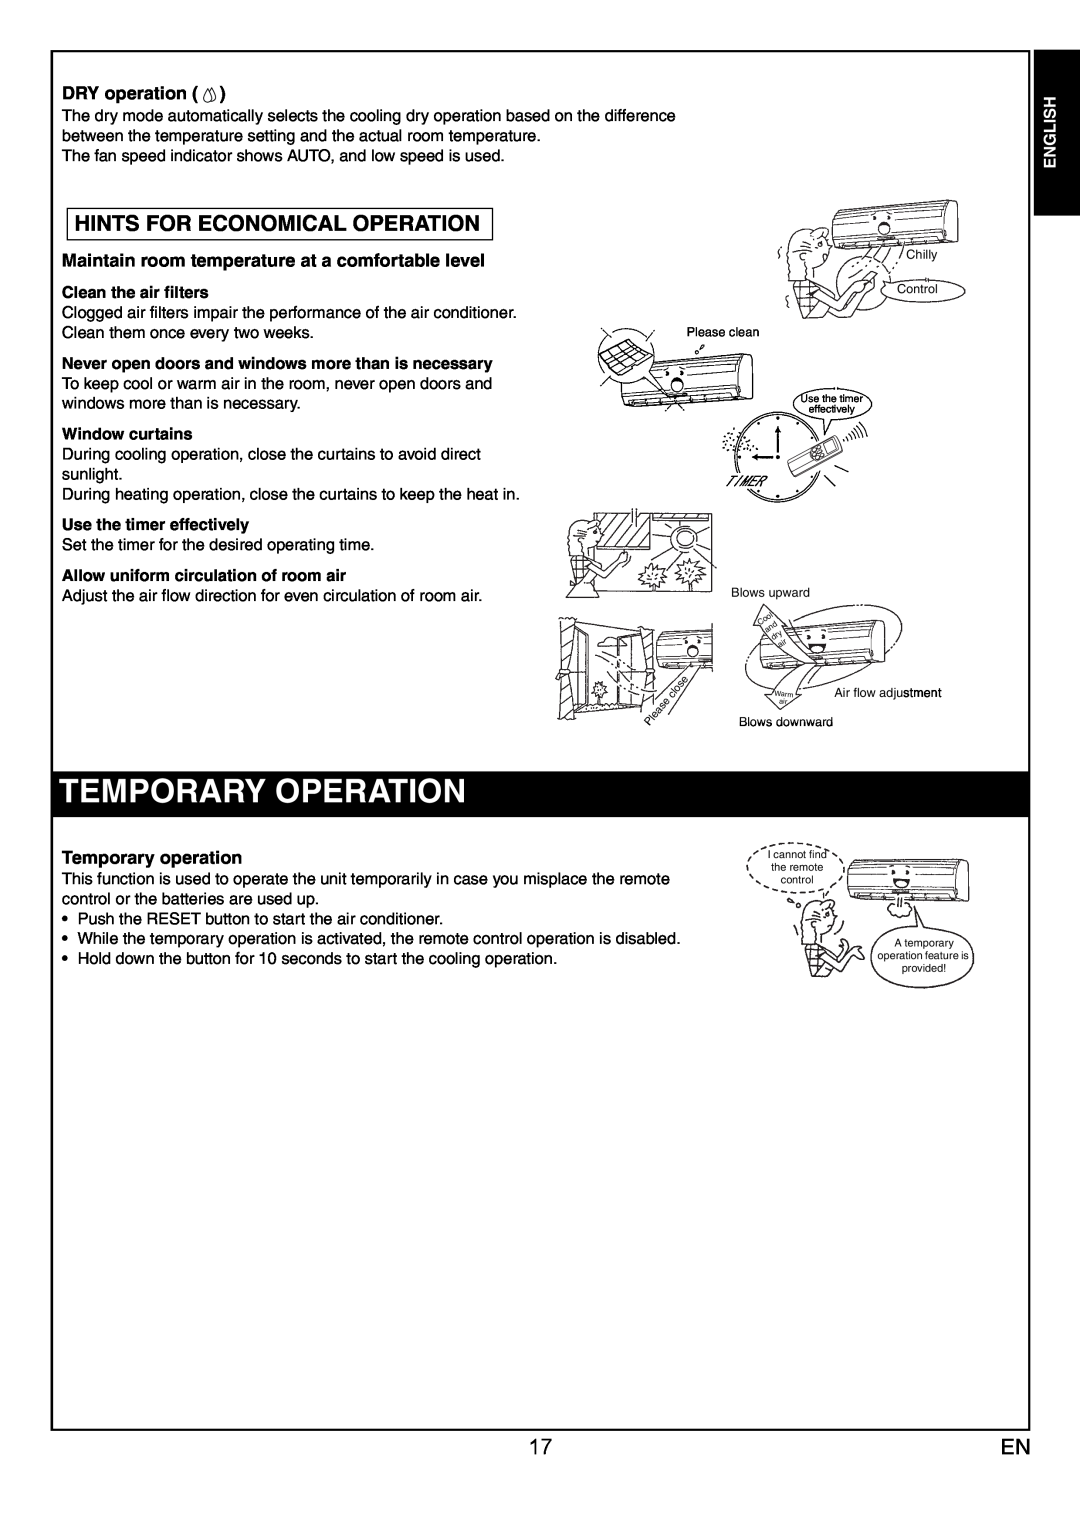 Toshiba RAS-10JKVP-E Temporary Operation, DRY operation, Maintain room temperature at a comfortable level, English 